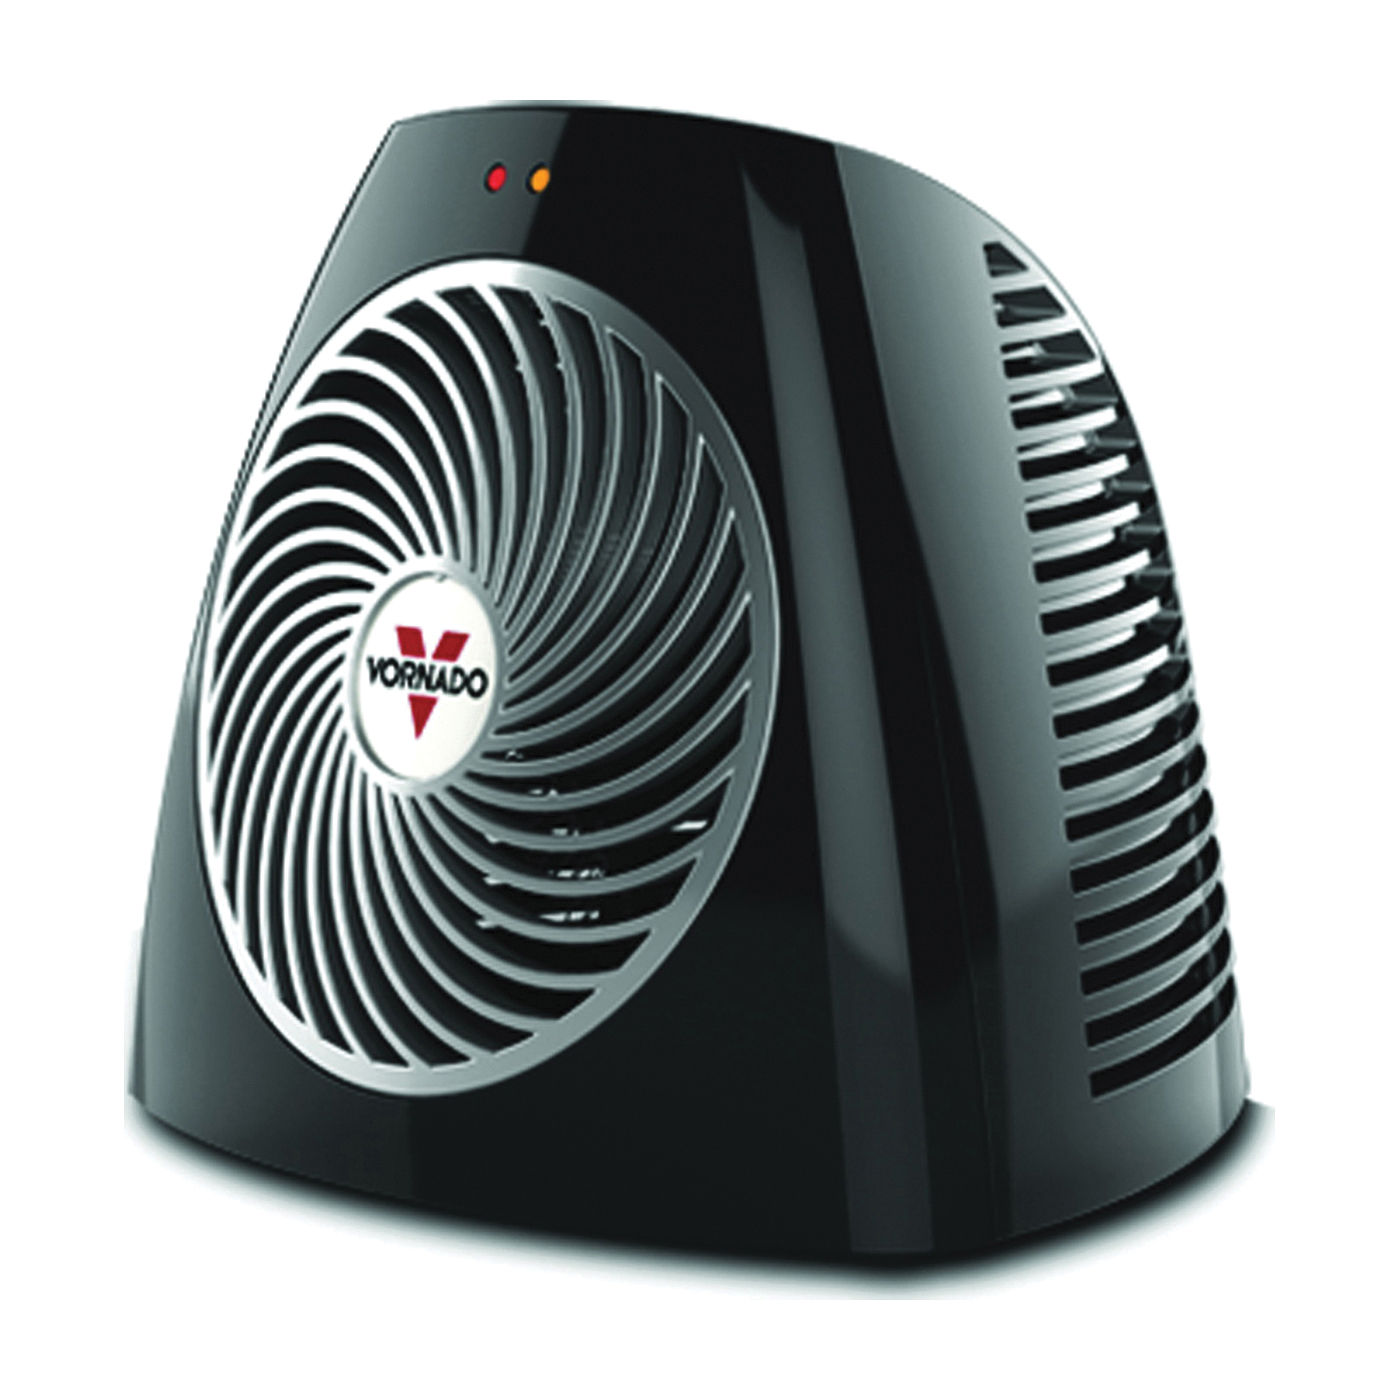 VH101 Series EH1-0105-06 Personal Vortex Heater, 6.25 A, 120 V, 375/750 W, 5120 Btu Heating, Black